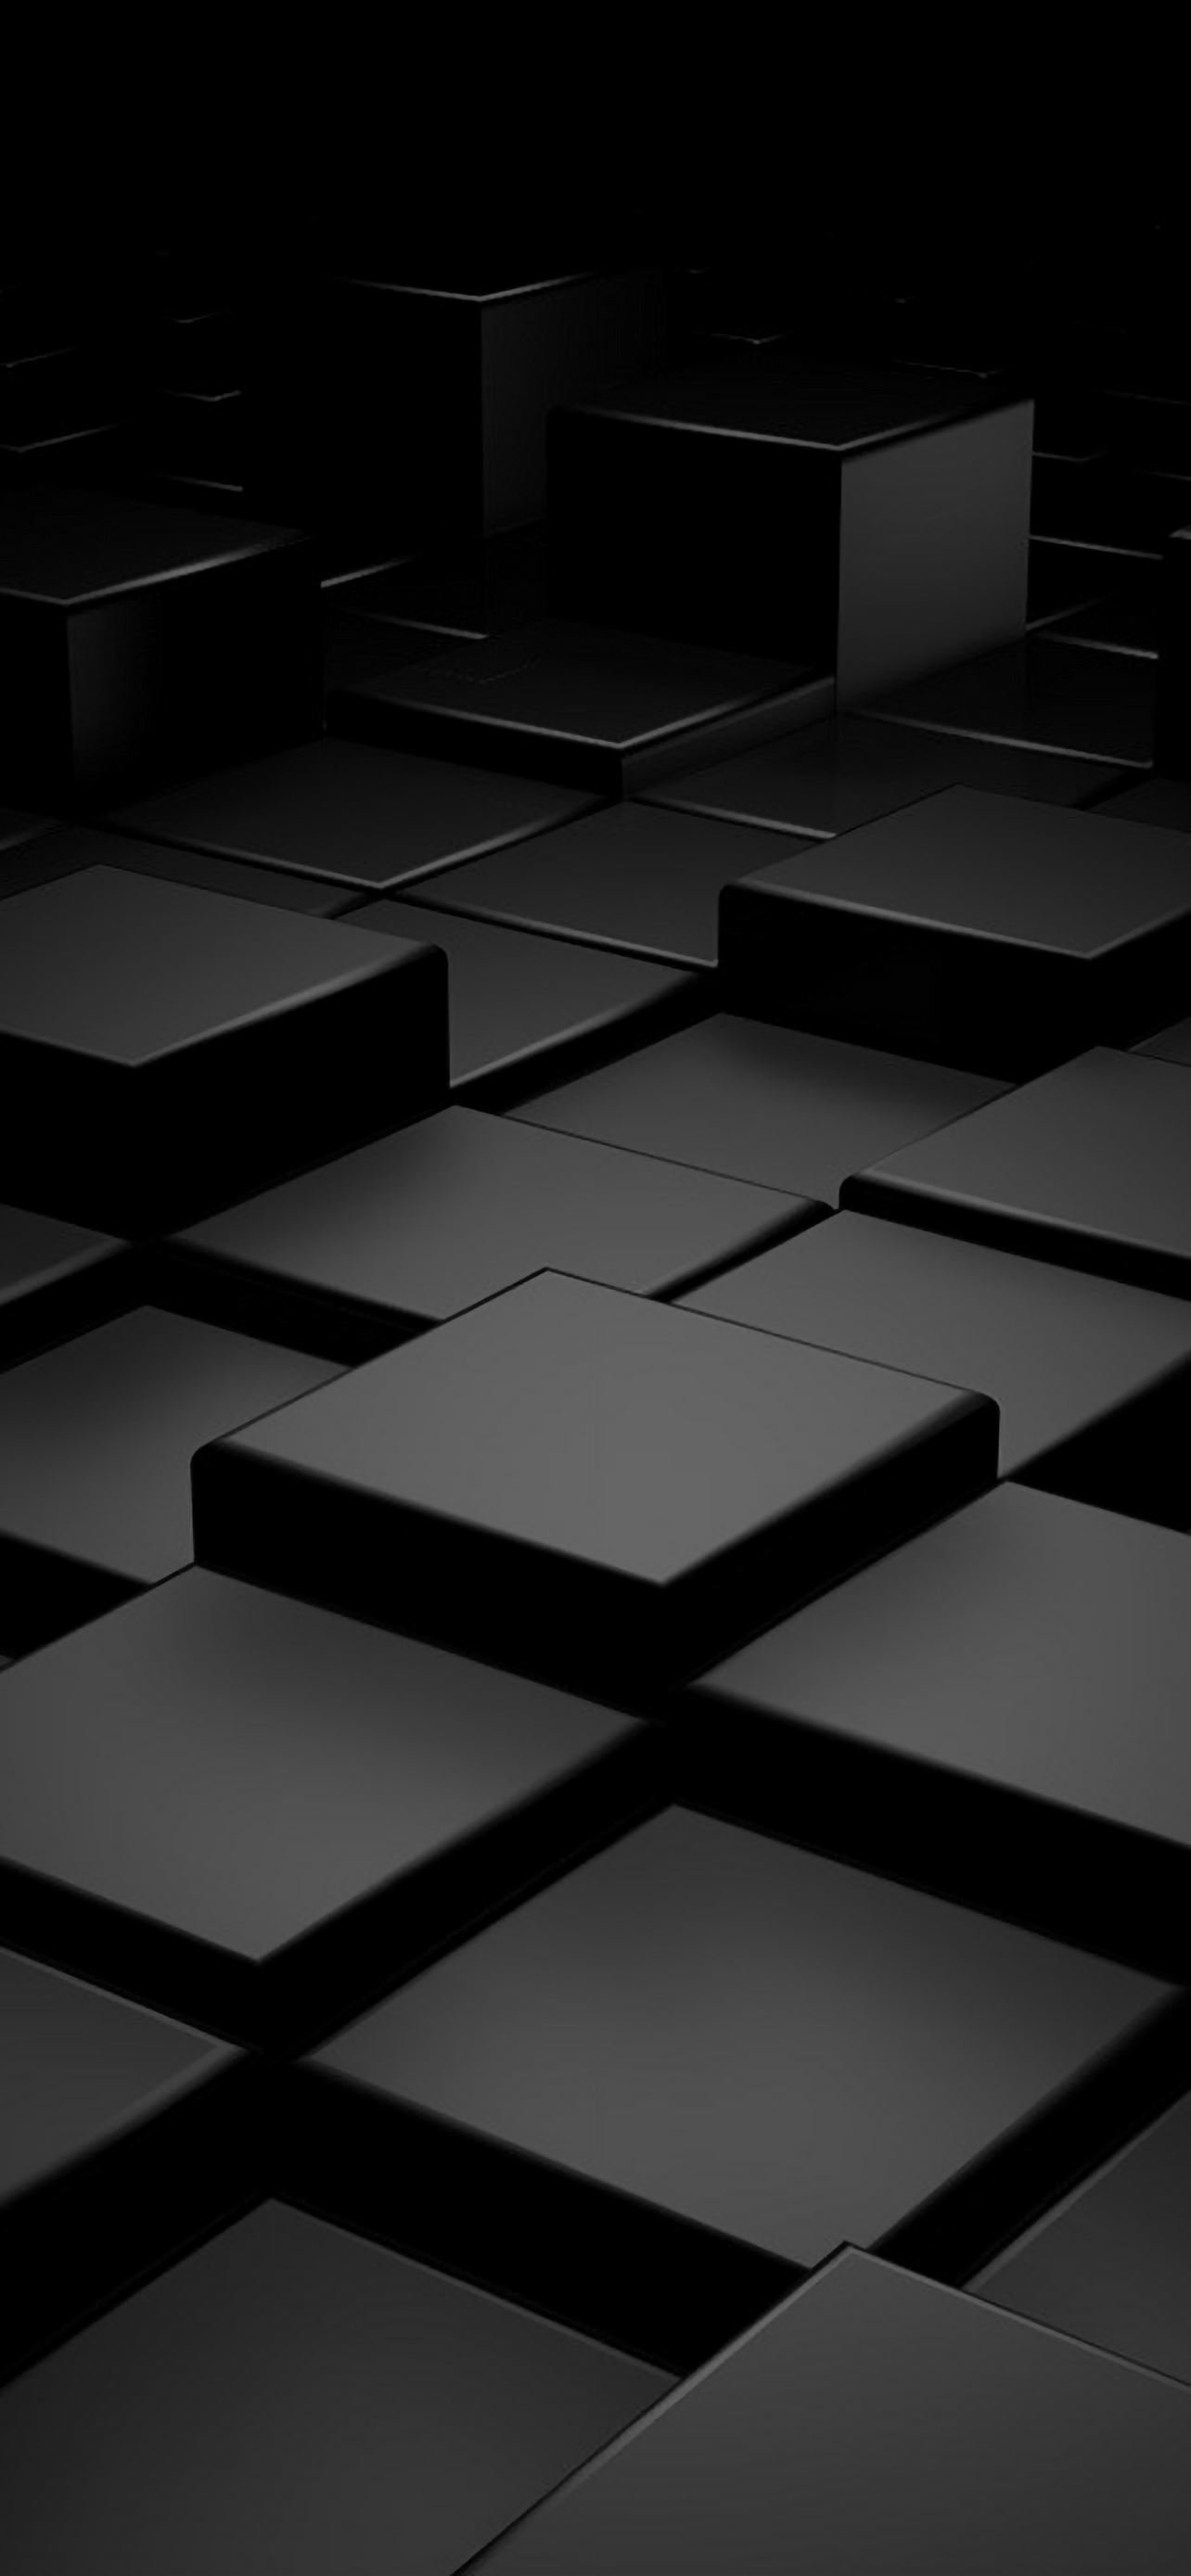 Black 3D Blocks iPhone Wallpaper Free Download